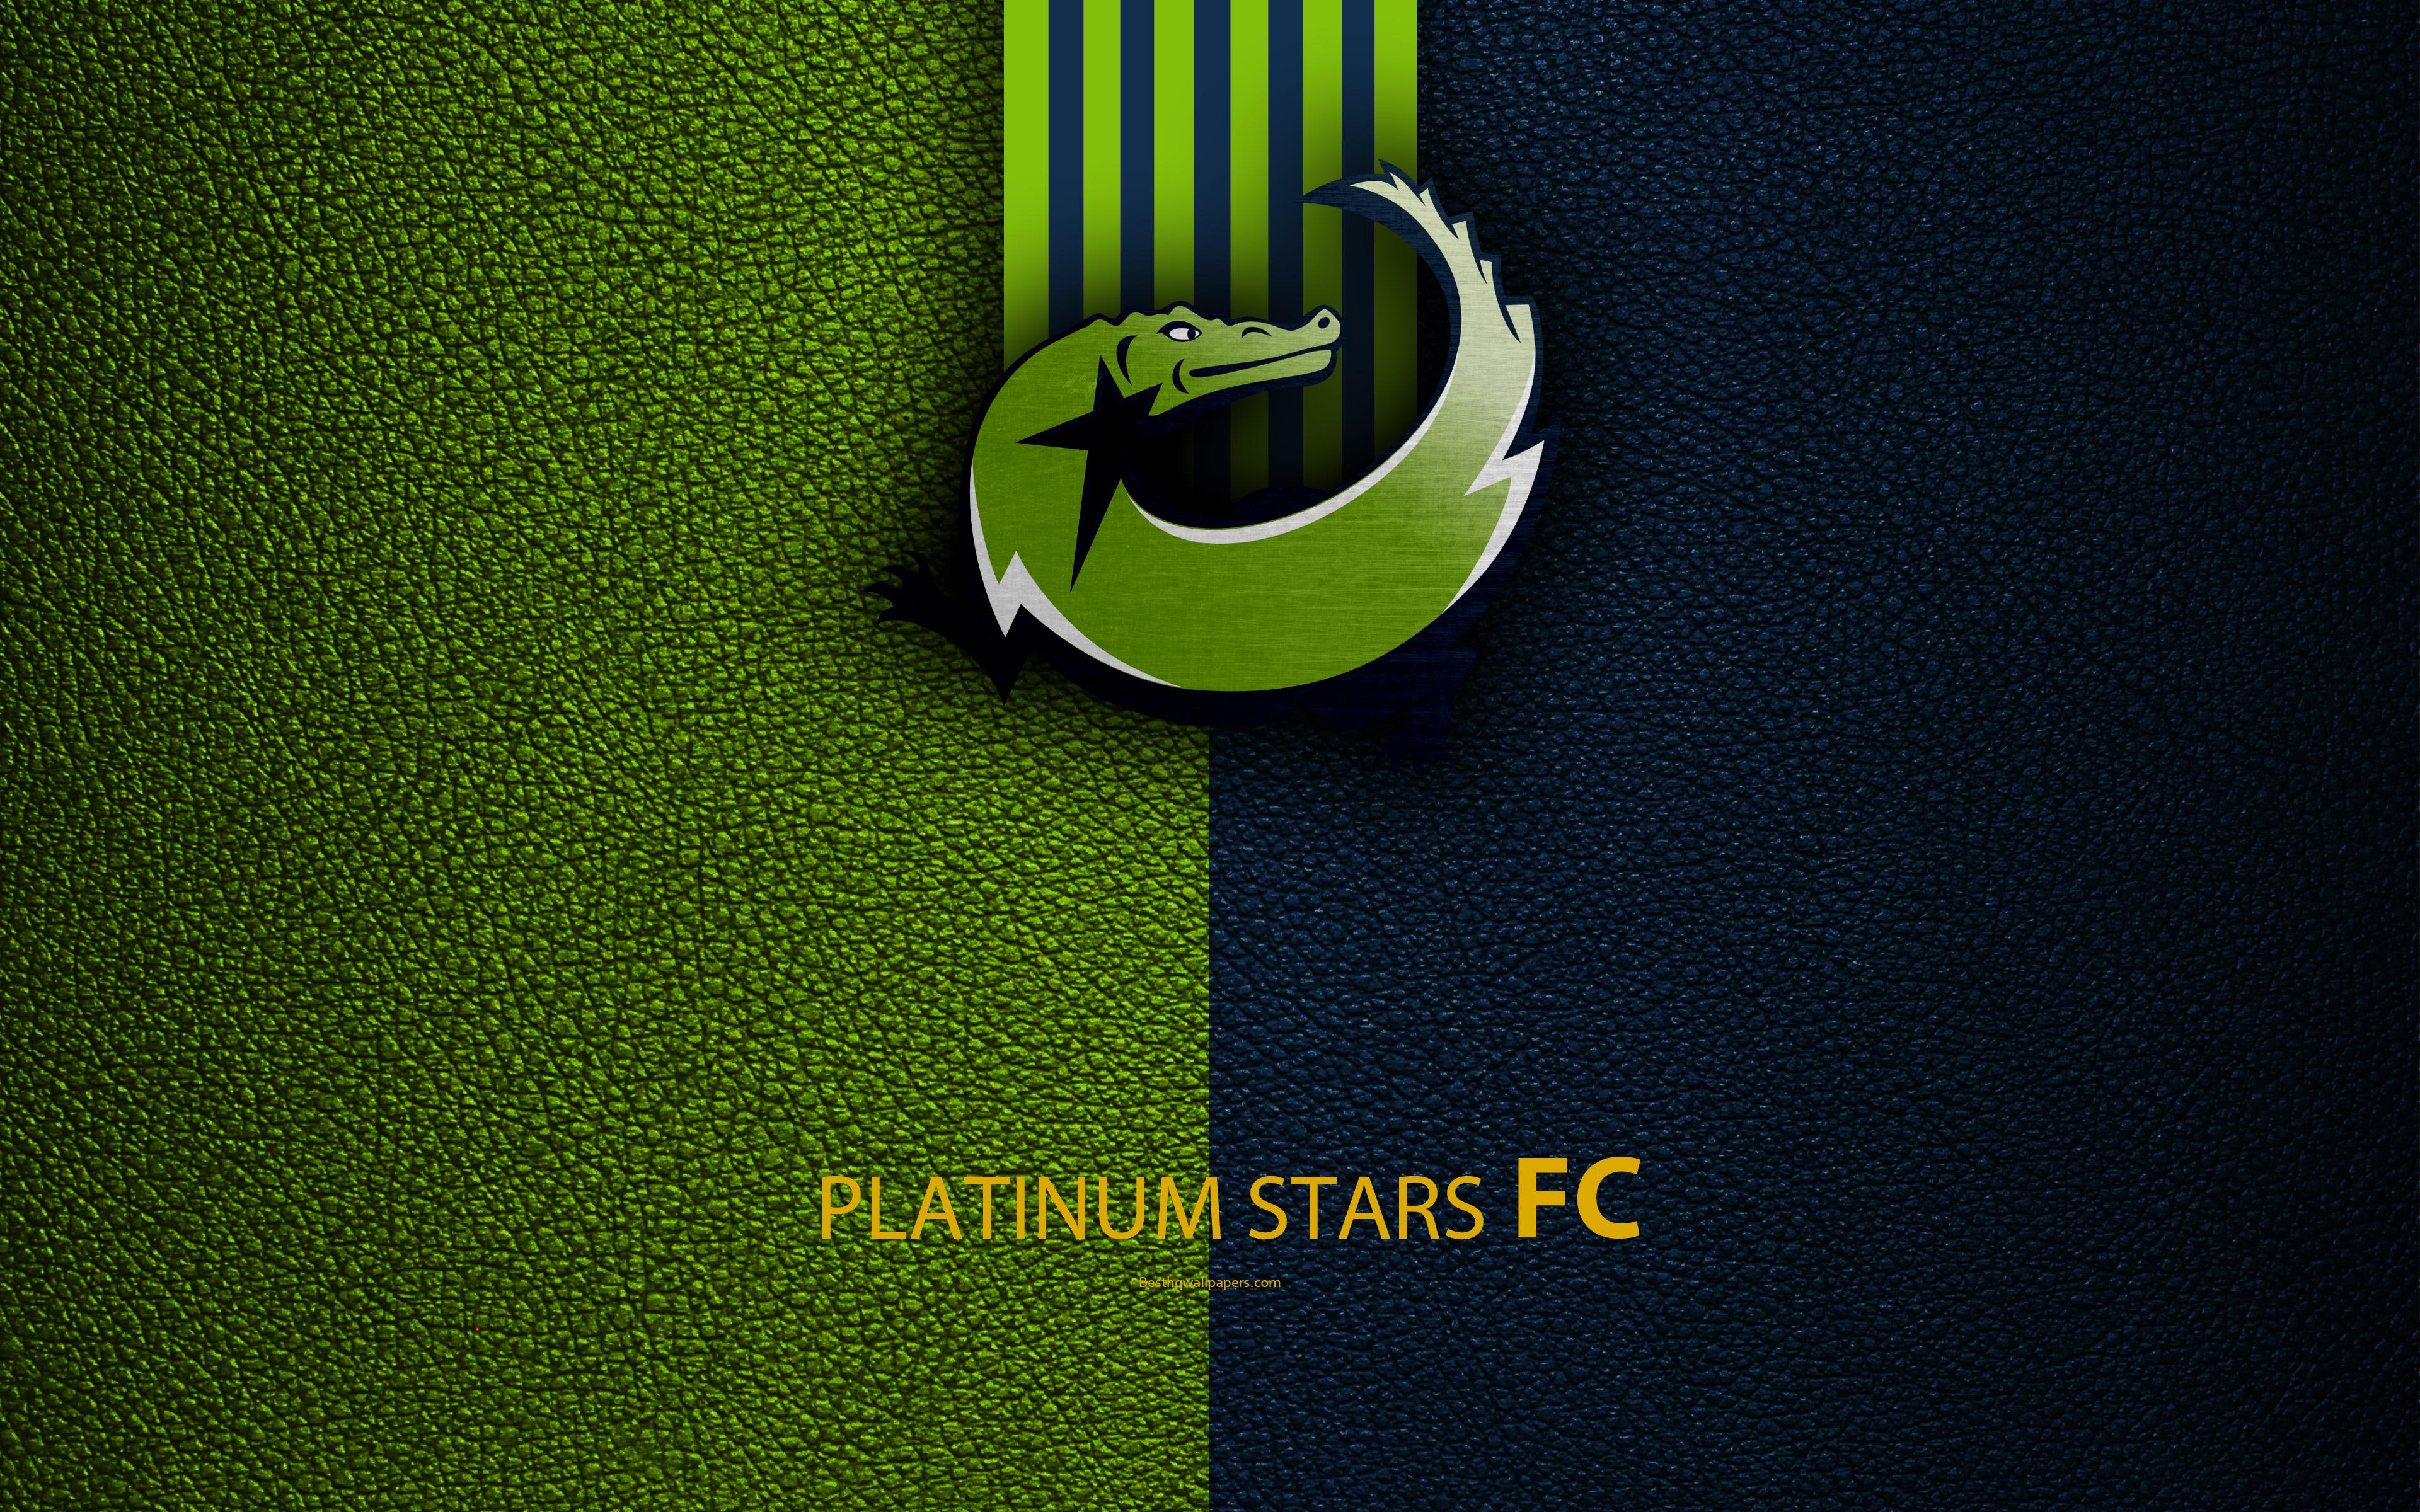 Download wallpaper Platinum Stars FC, 4k, leather texture, logo